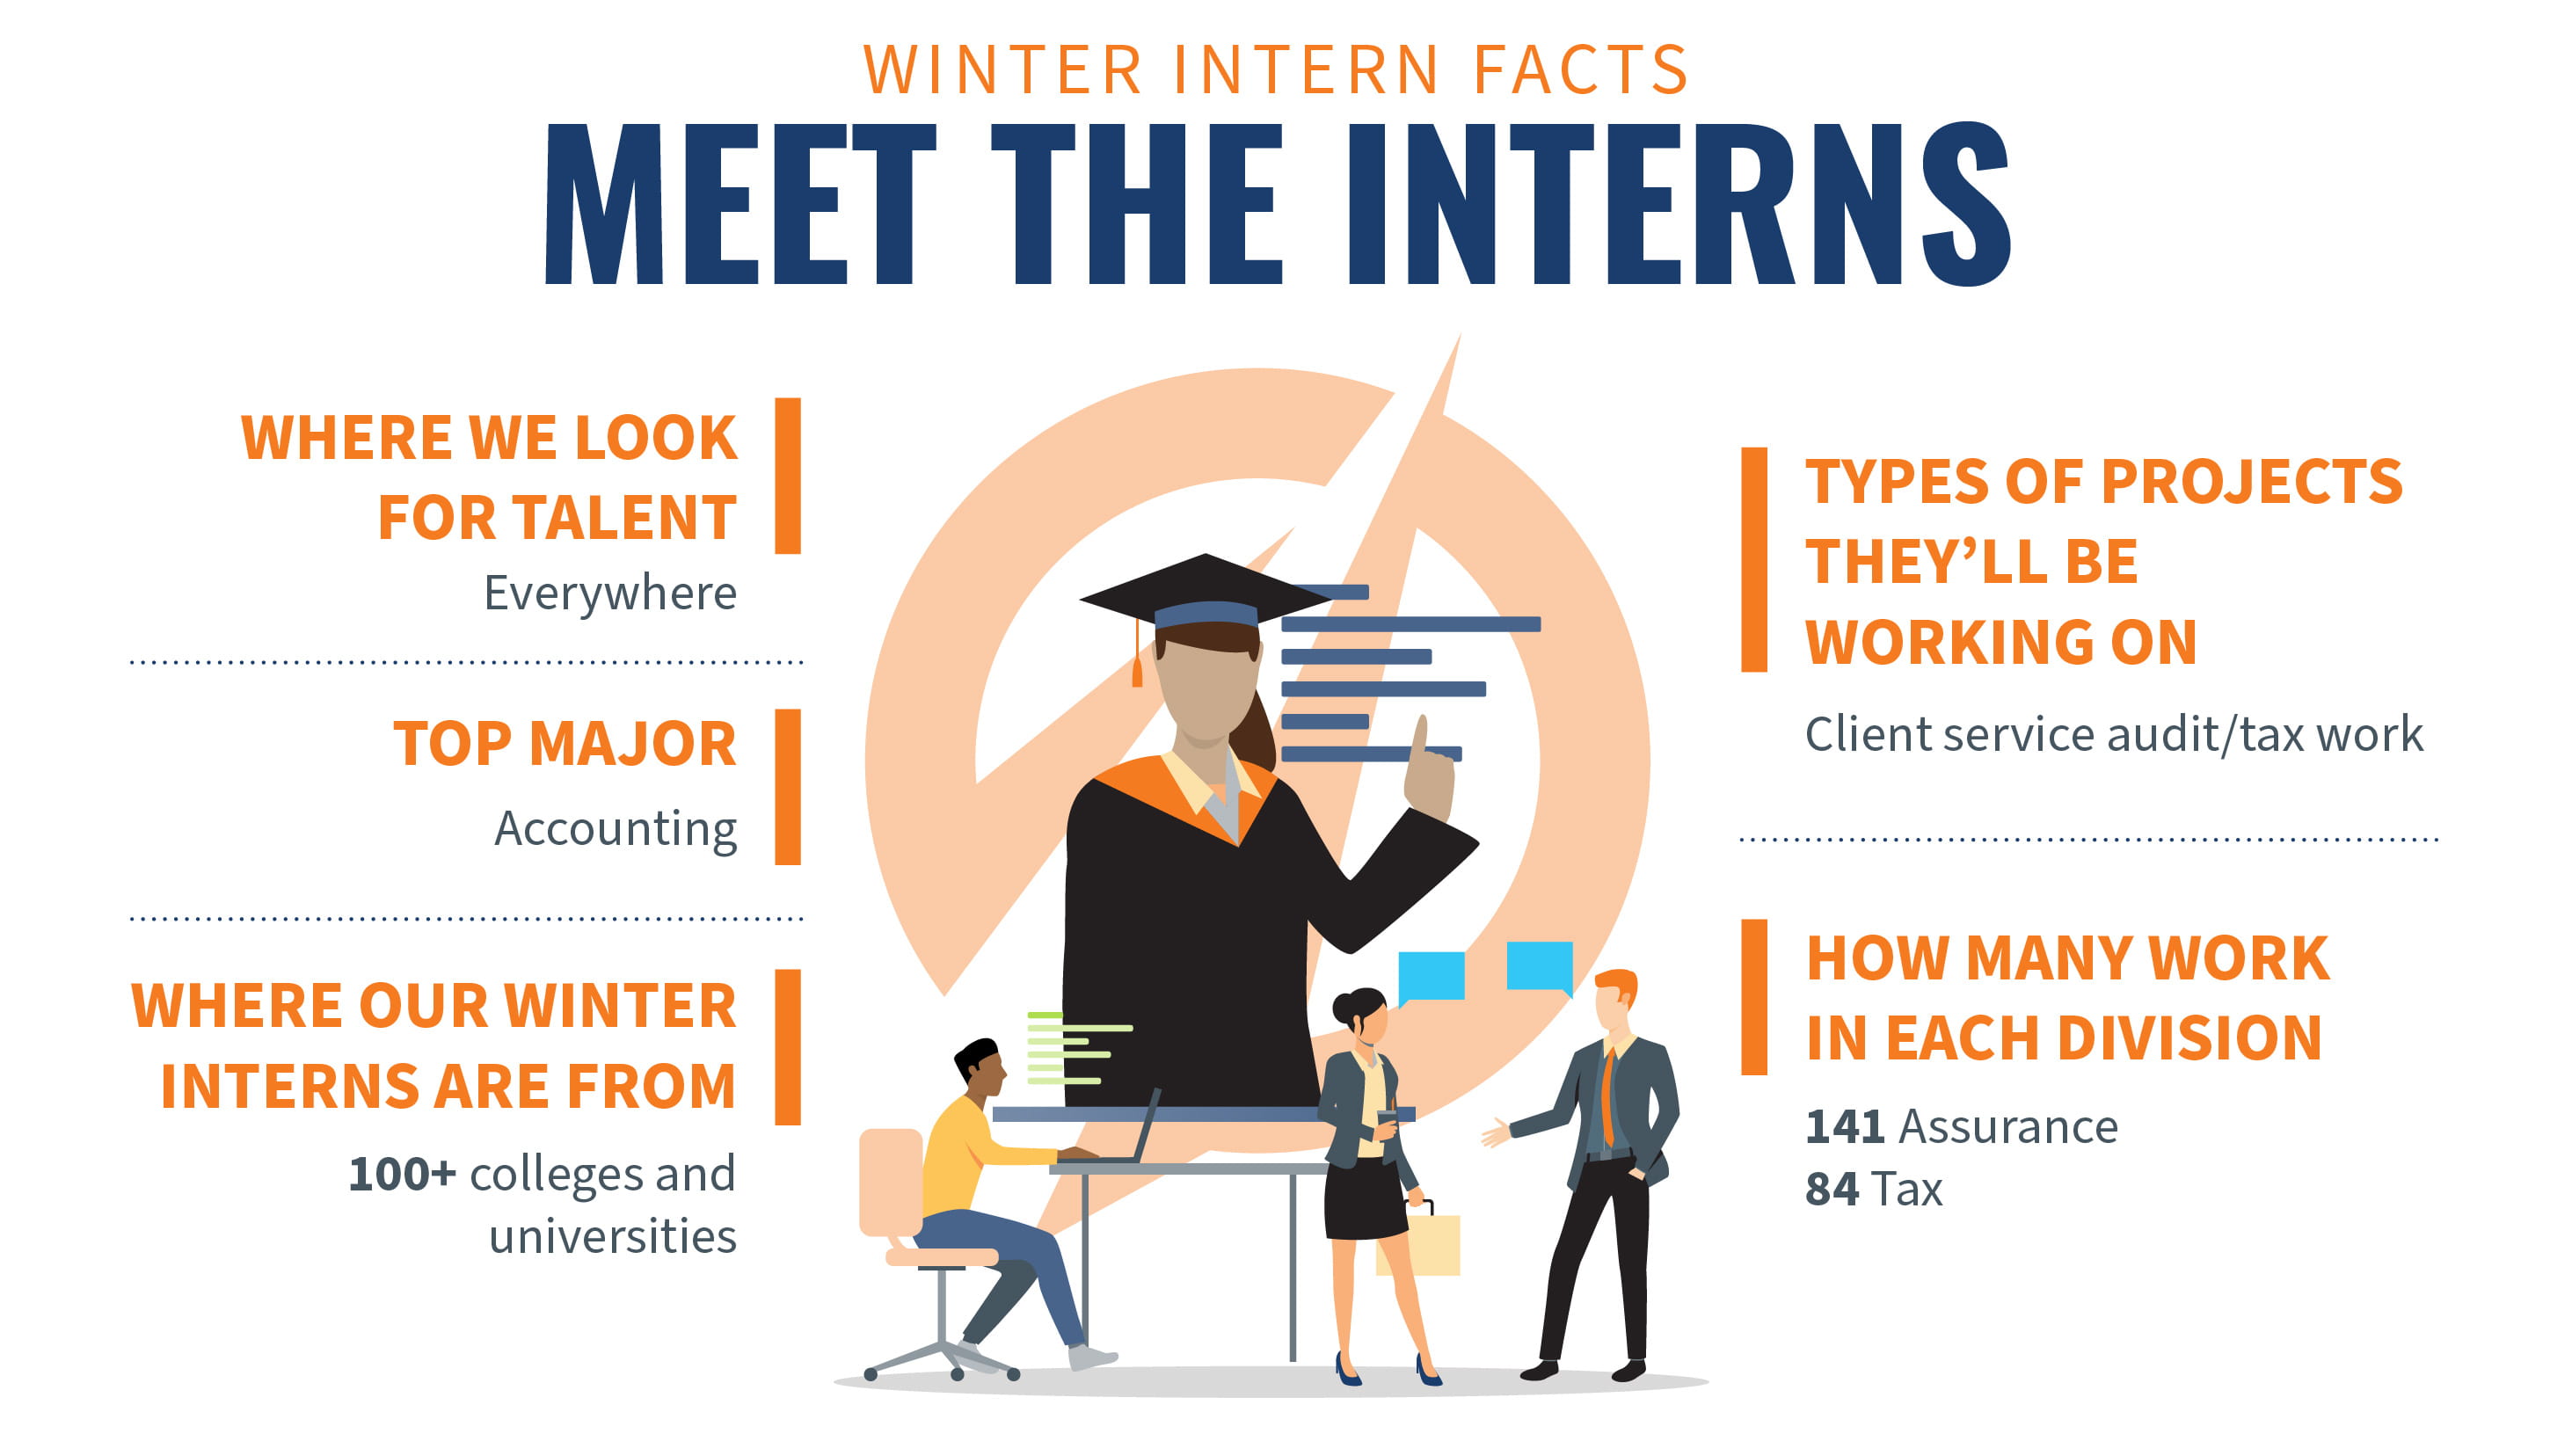 Meet the Winter Interns infographic